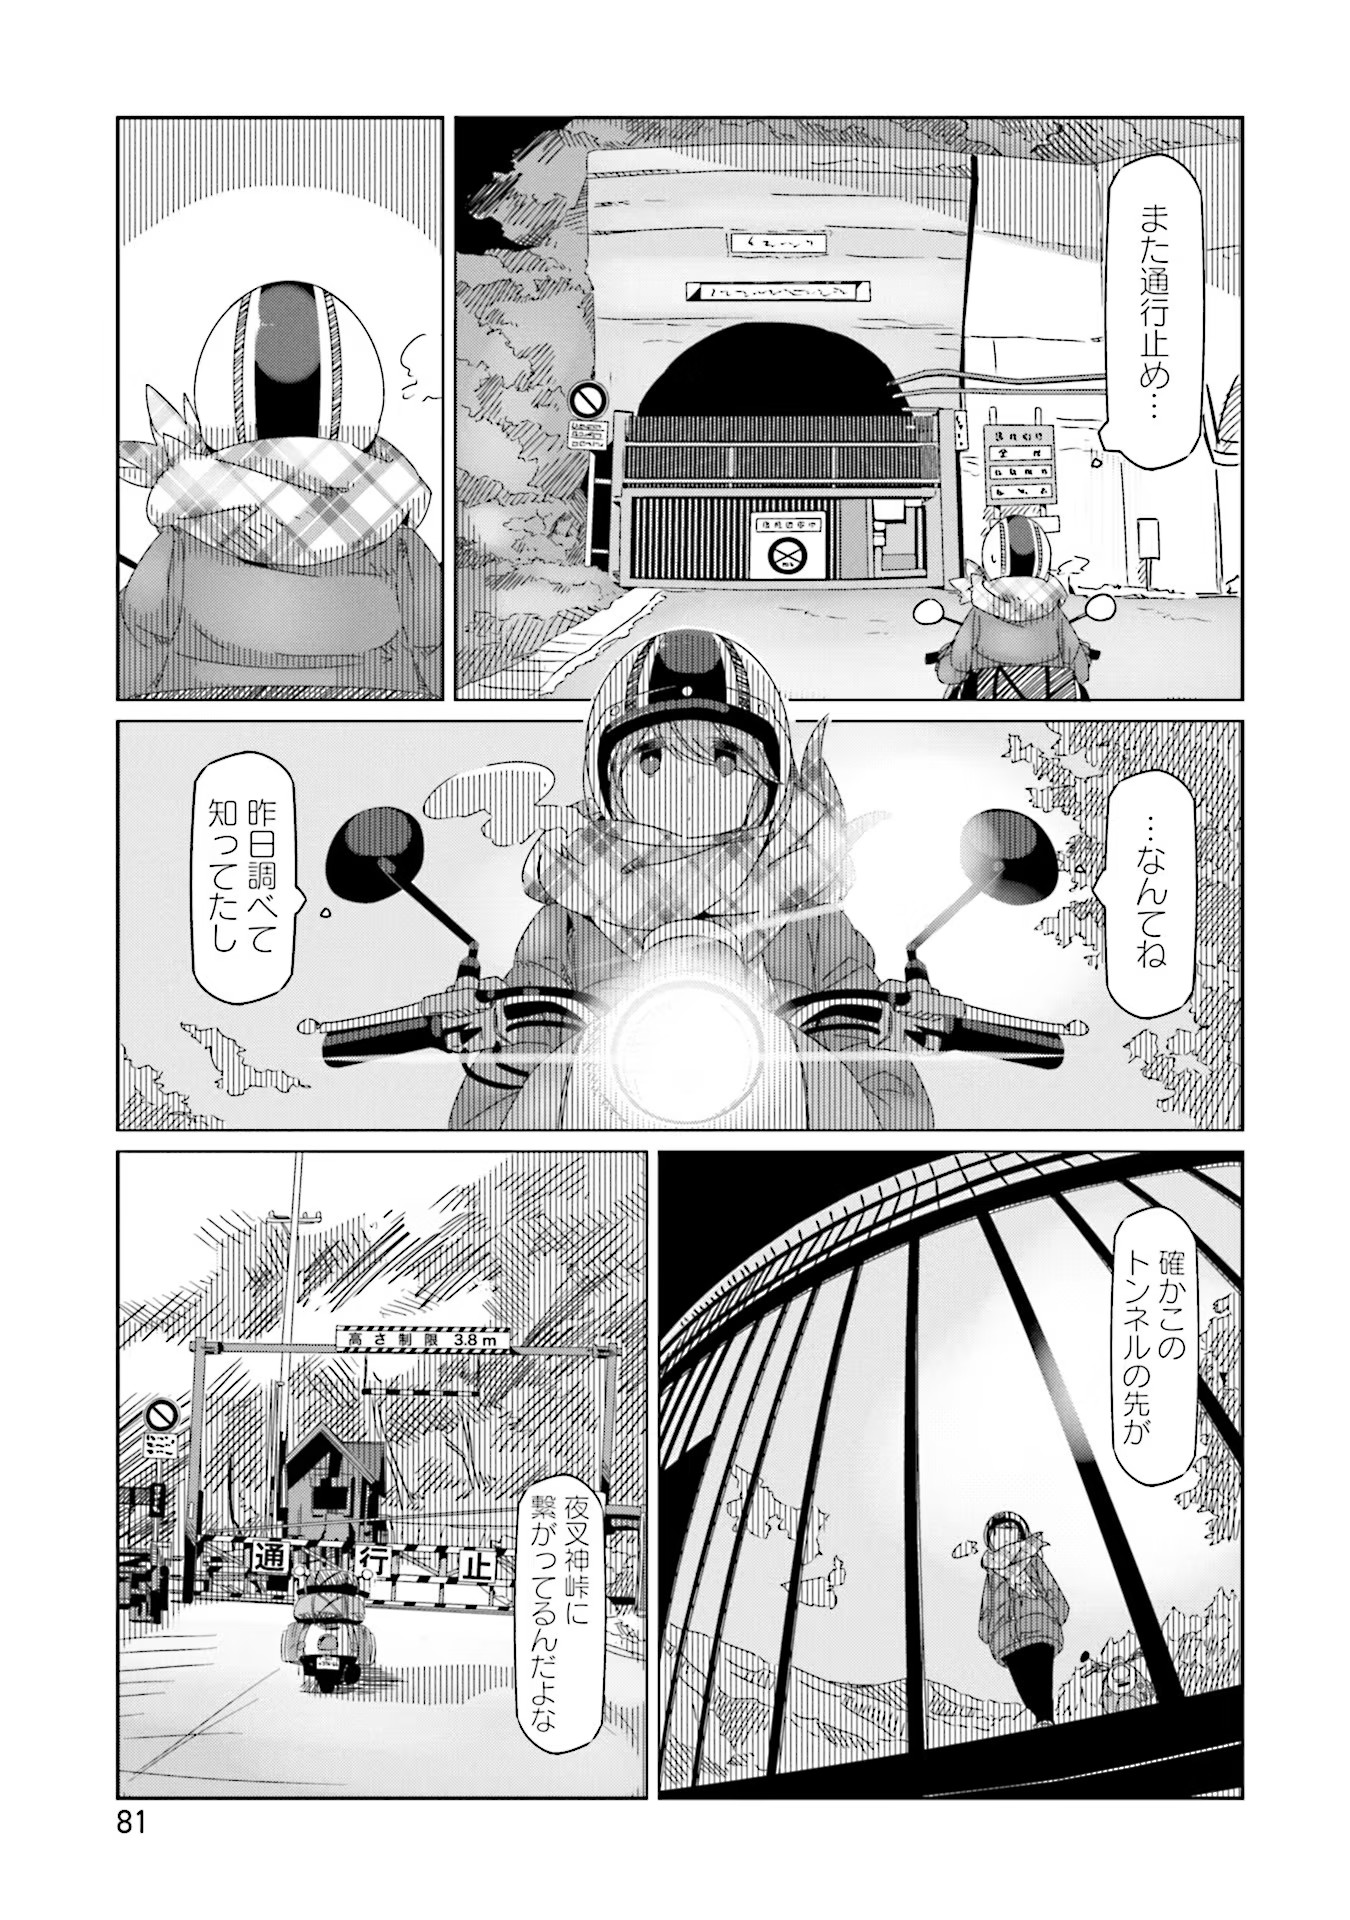 Yuru Camp - Chapter 38 - Page 1